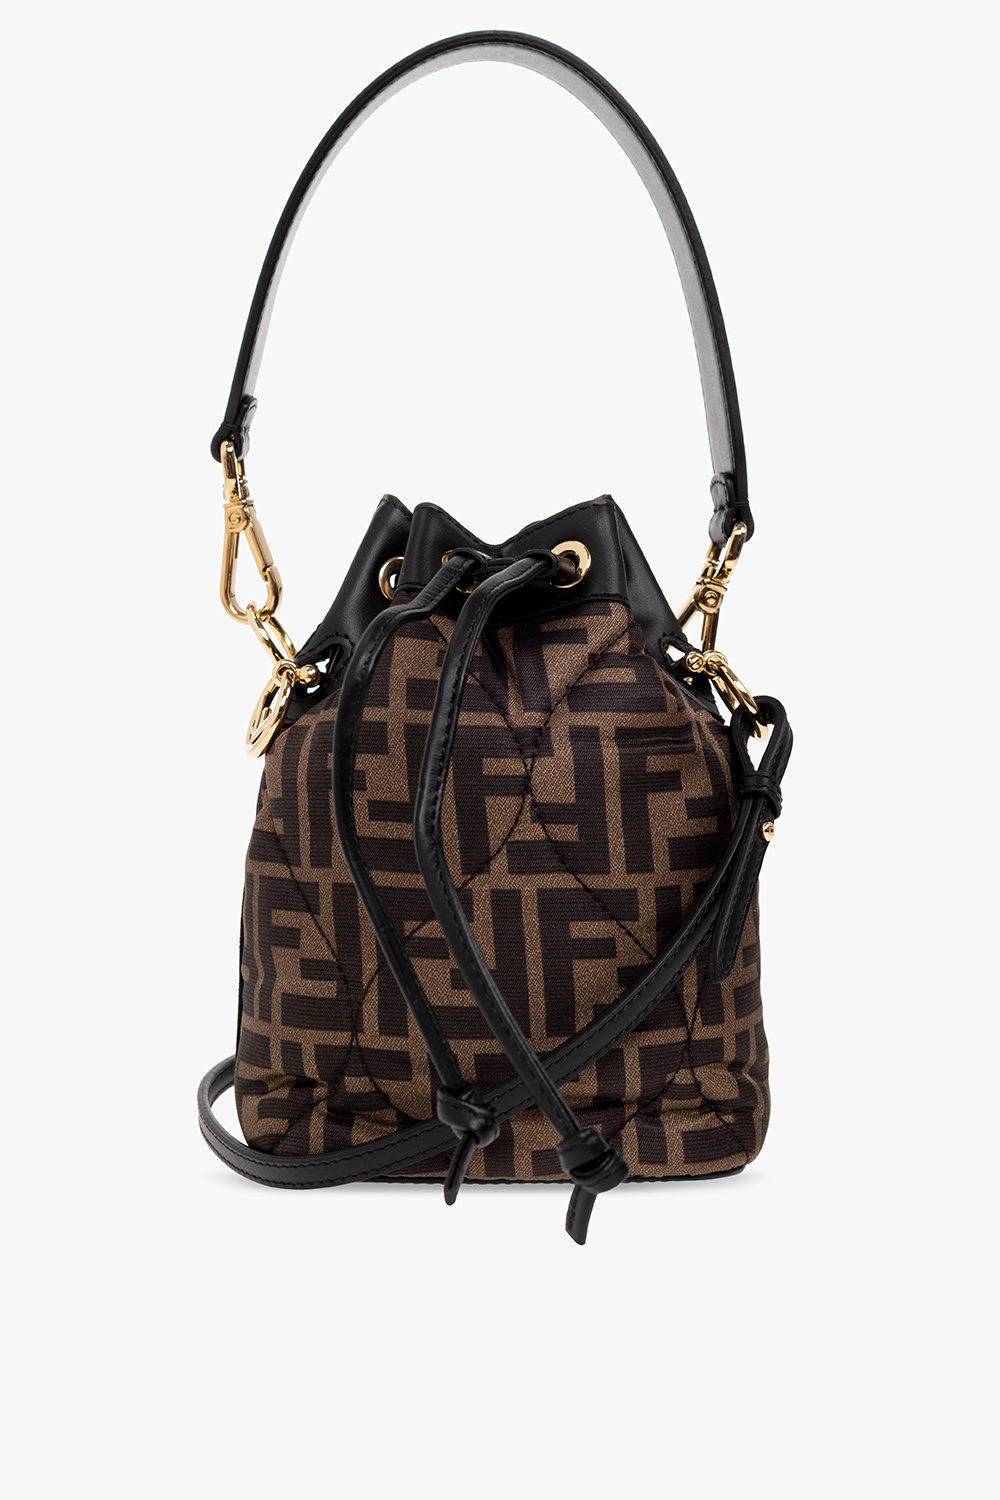 Fendi ‘Mon Tresor Mini’ shoulder bag